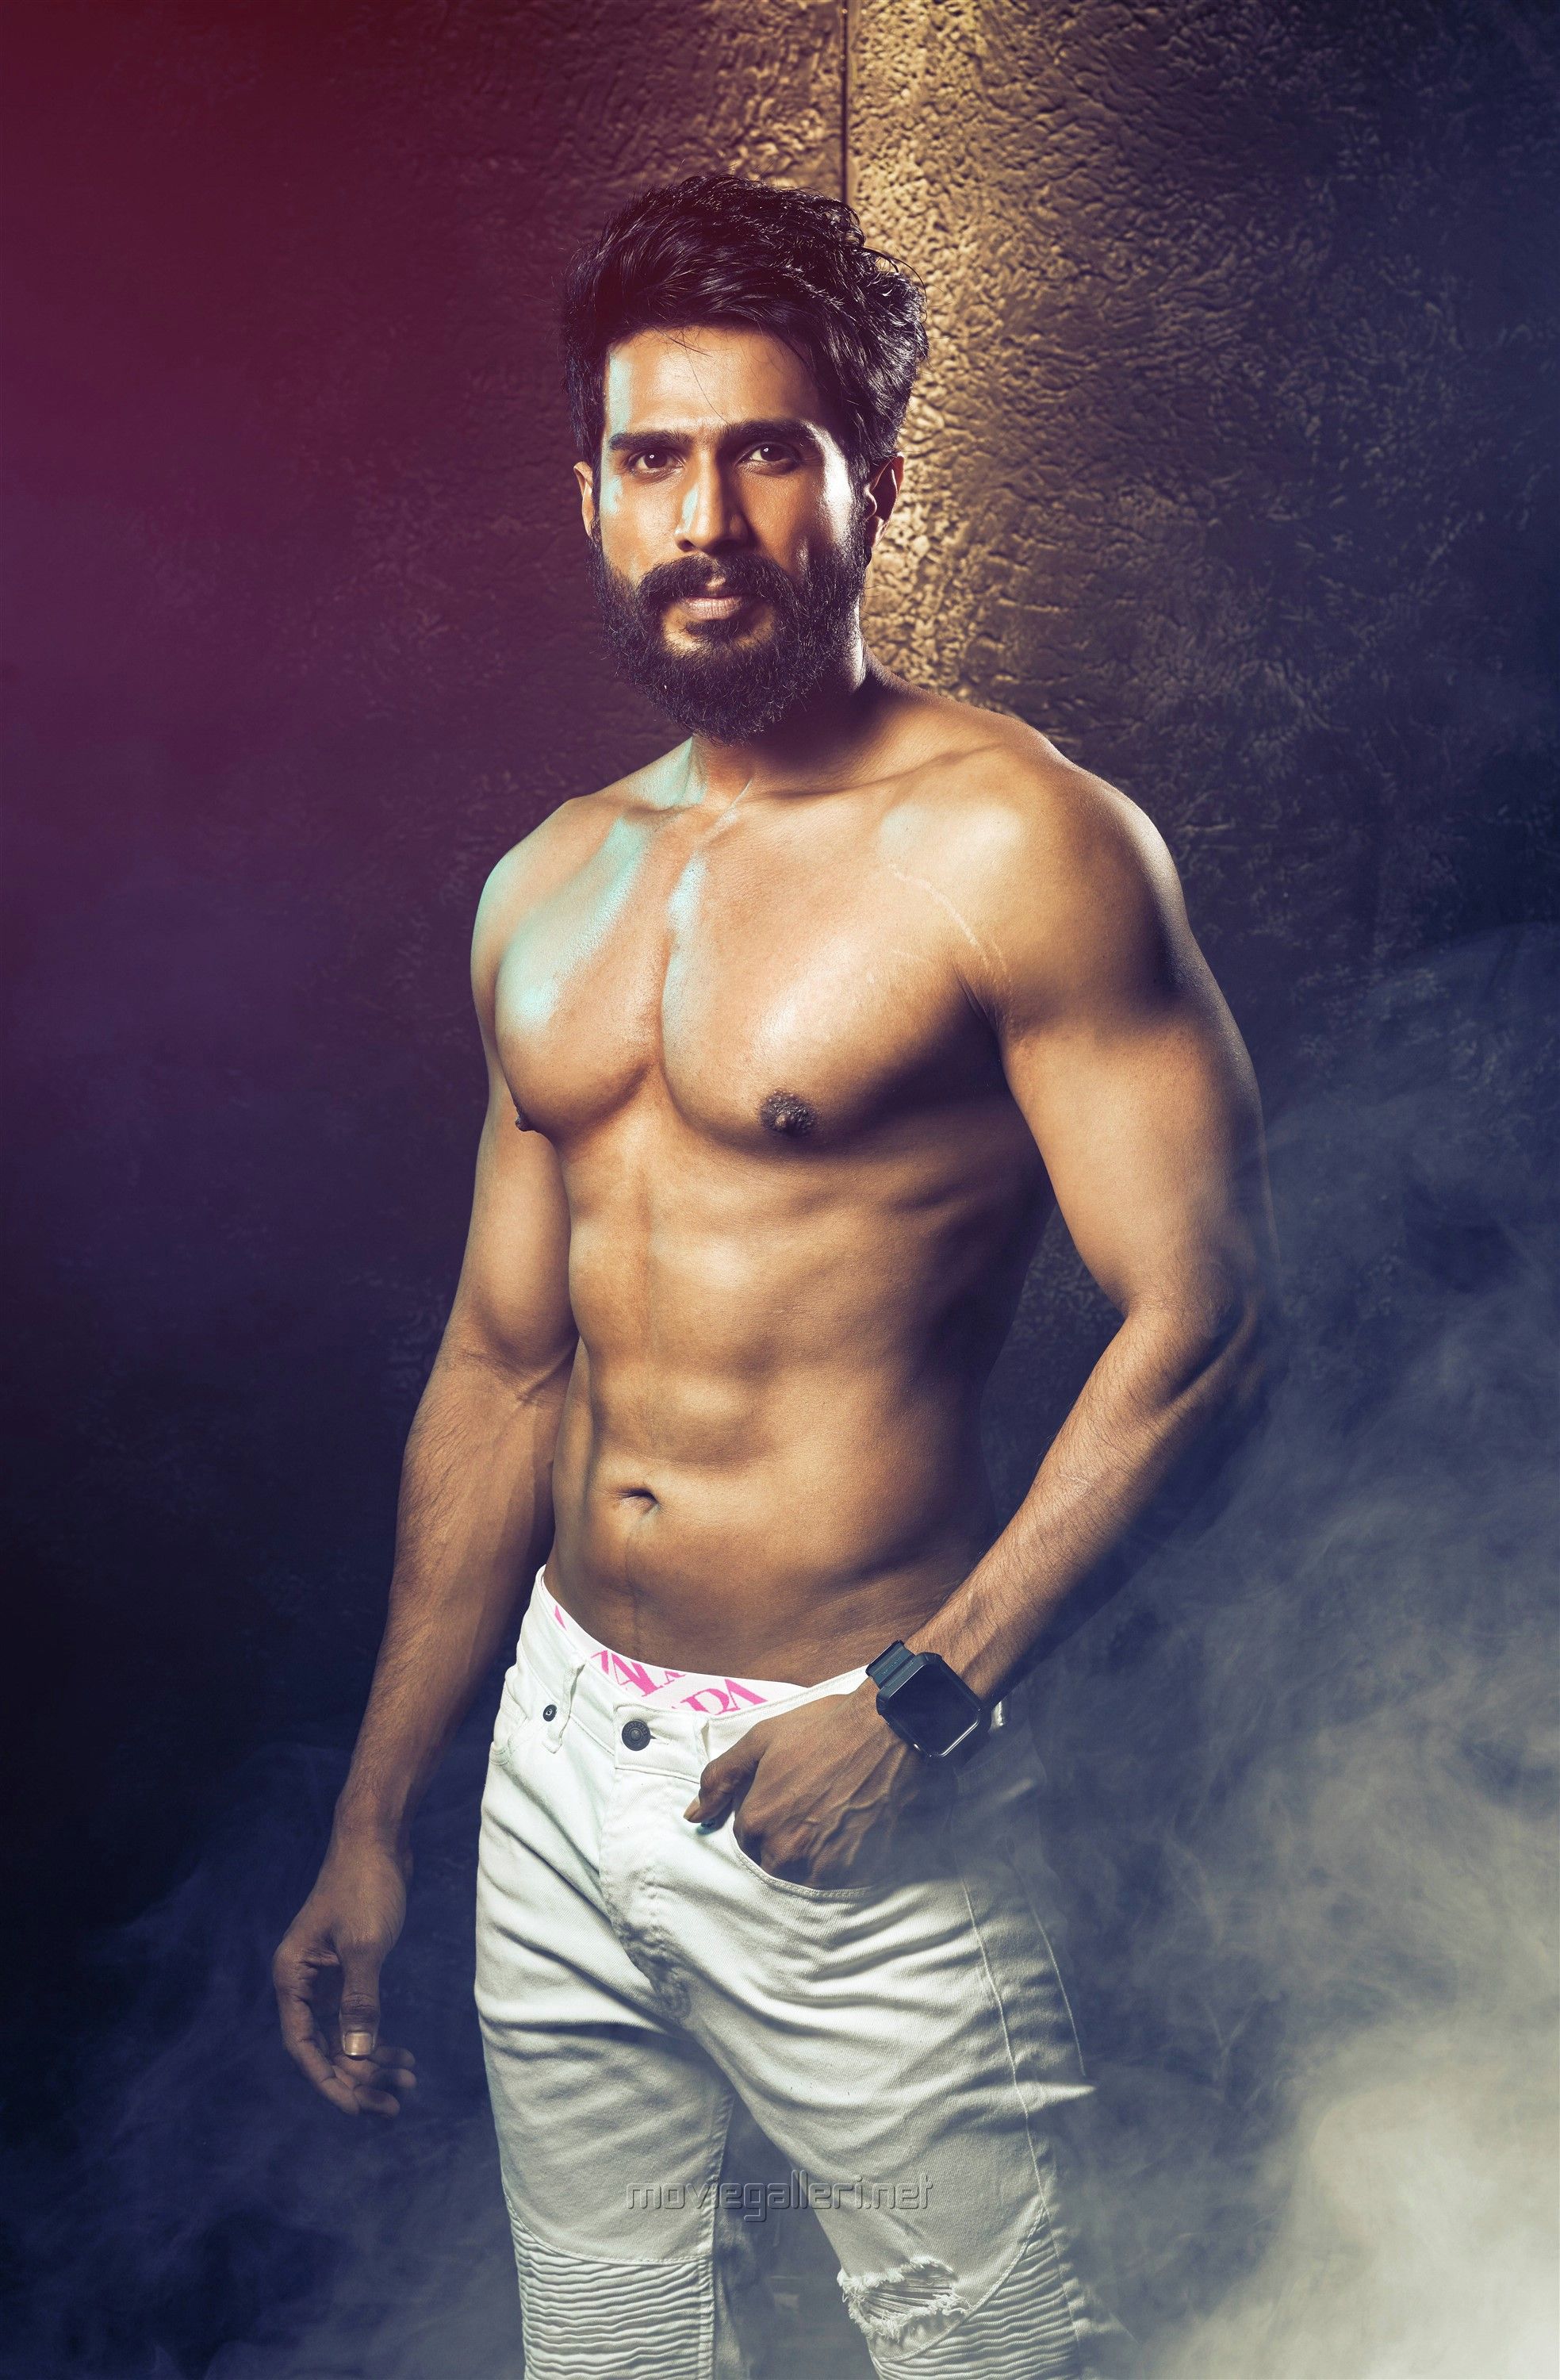 Actor Vishnu Vishal 6 Pack Body Photo HD. New Movie Posters